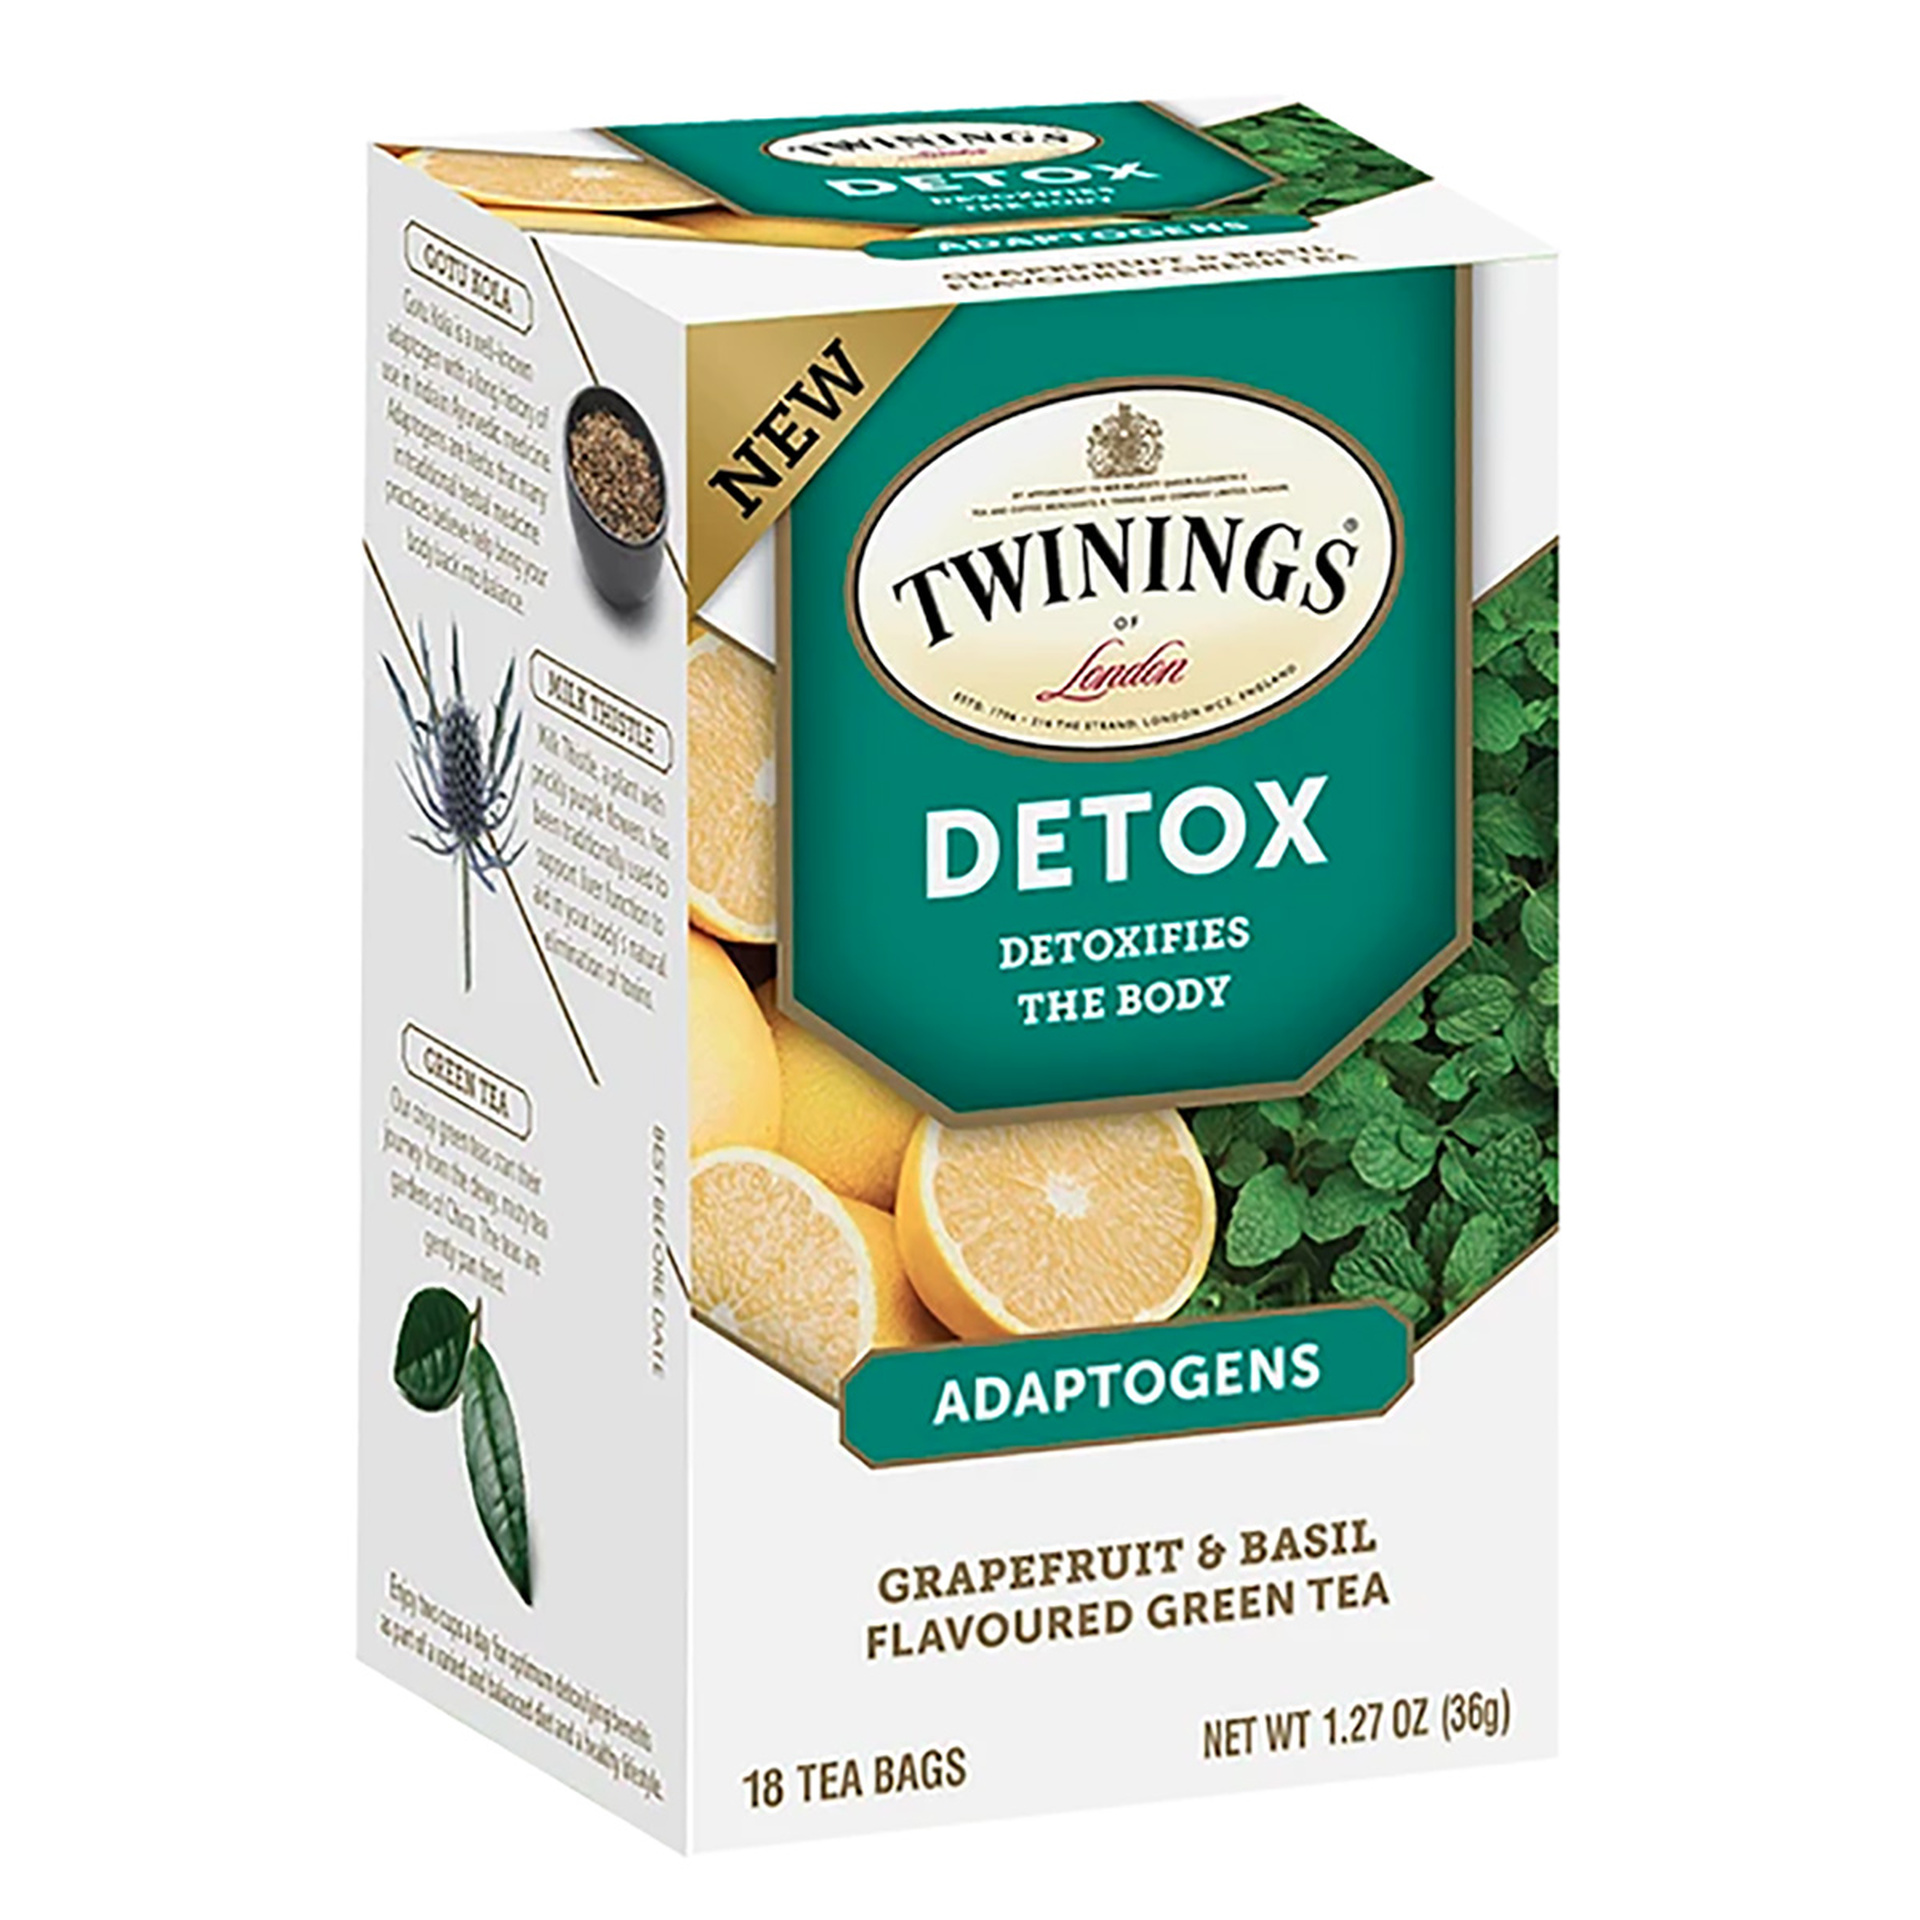 Twinings Wellness Tea - Detox - Grapefruit & Basil - 18 Count